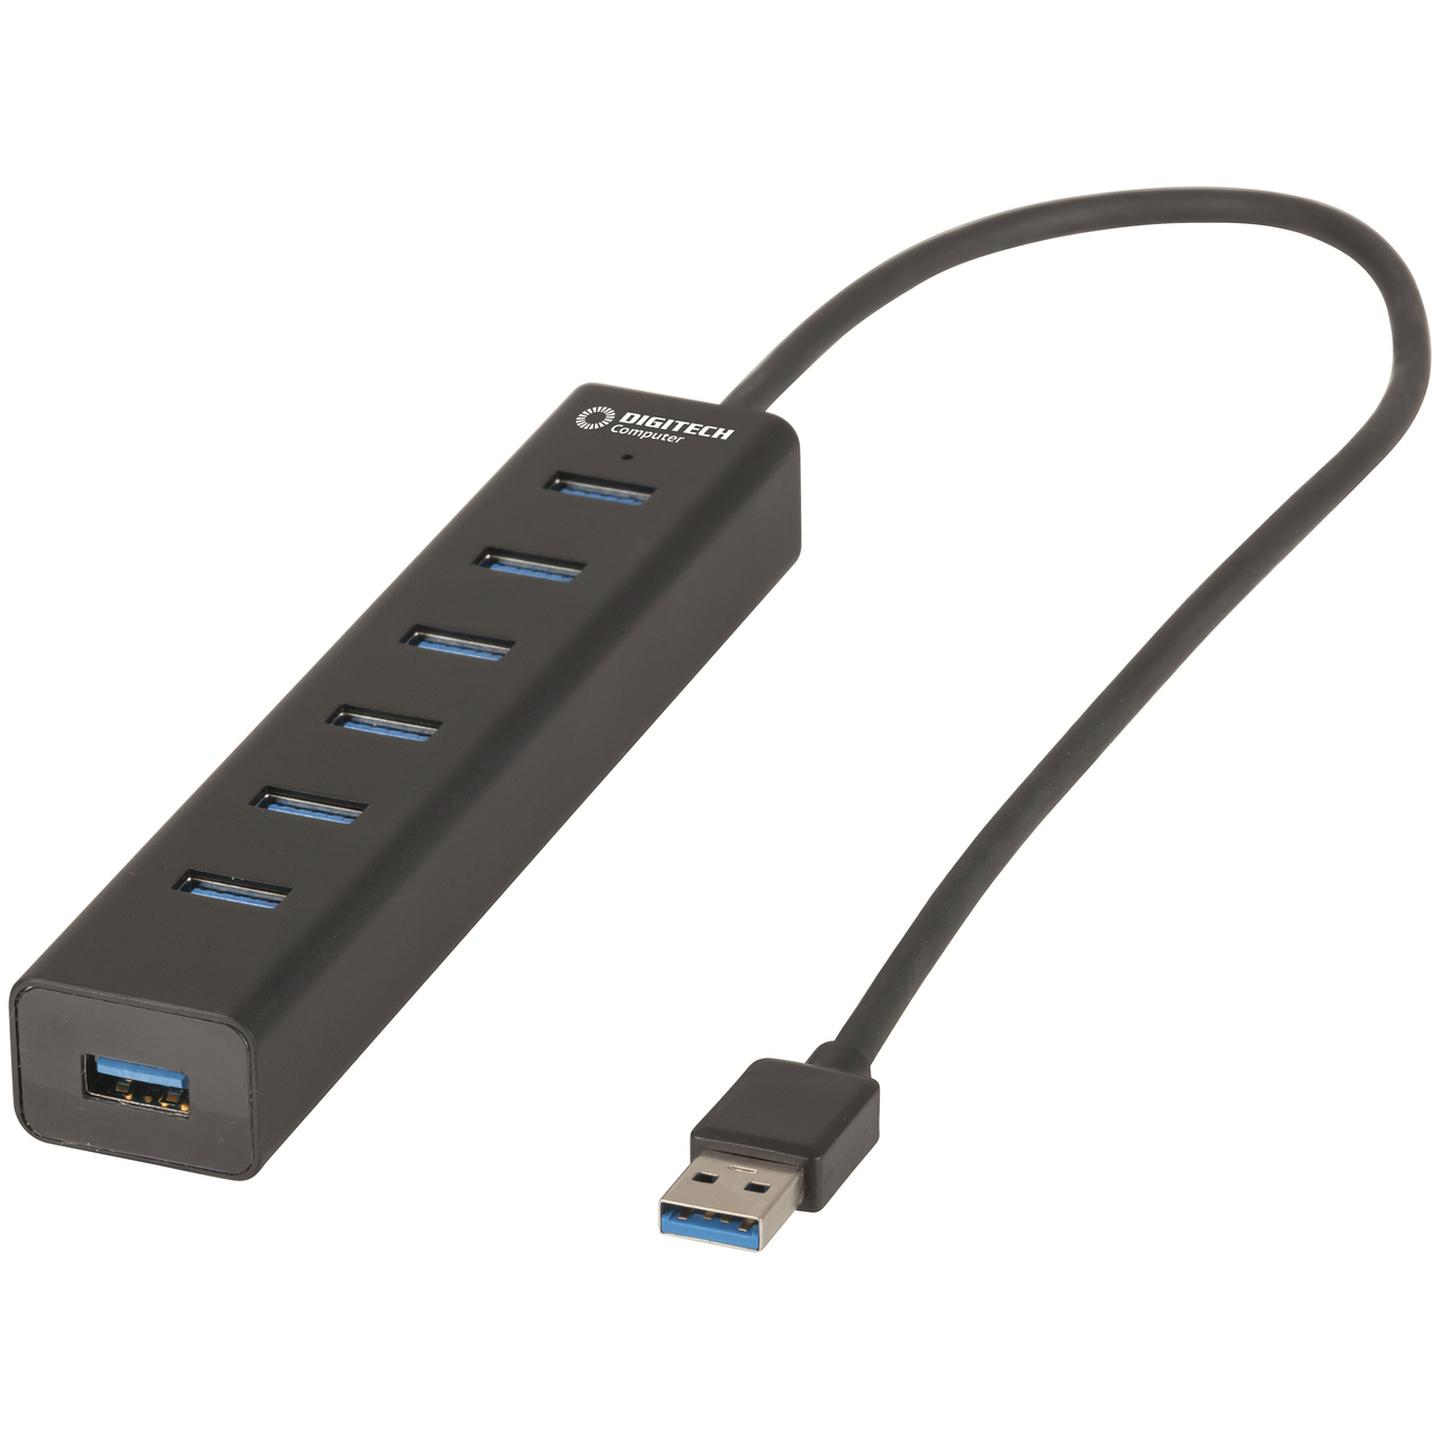 USB 3.0 7 Port Slimline Hub